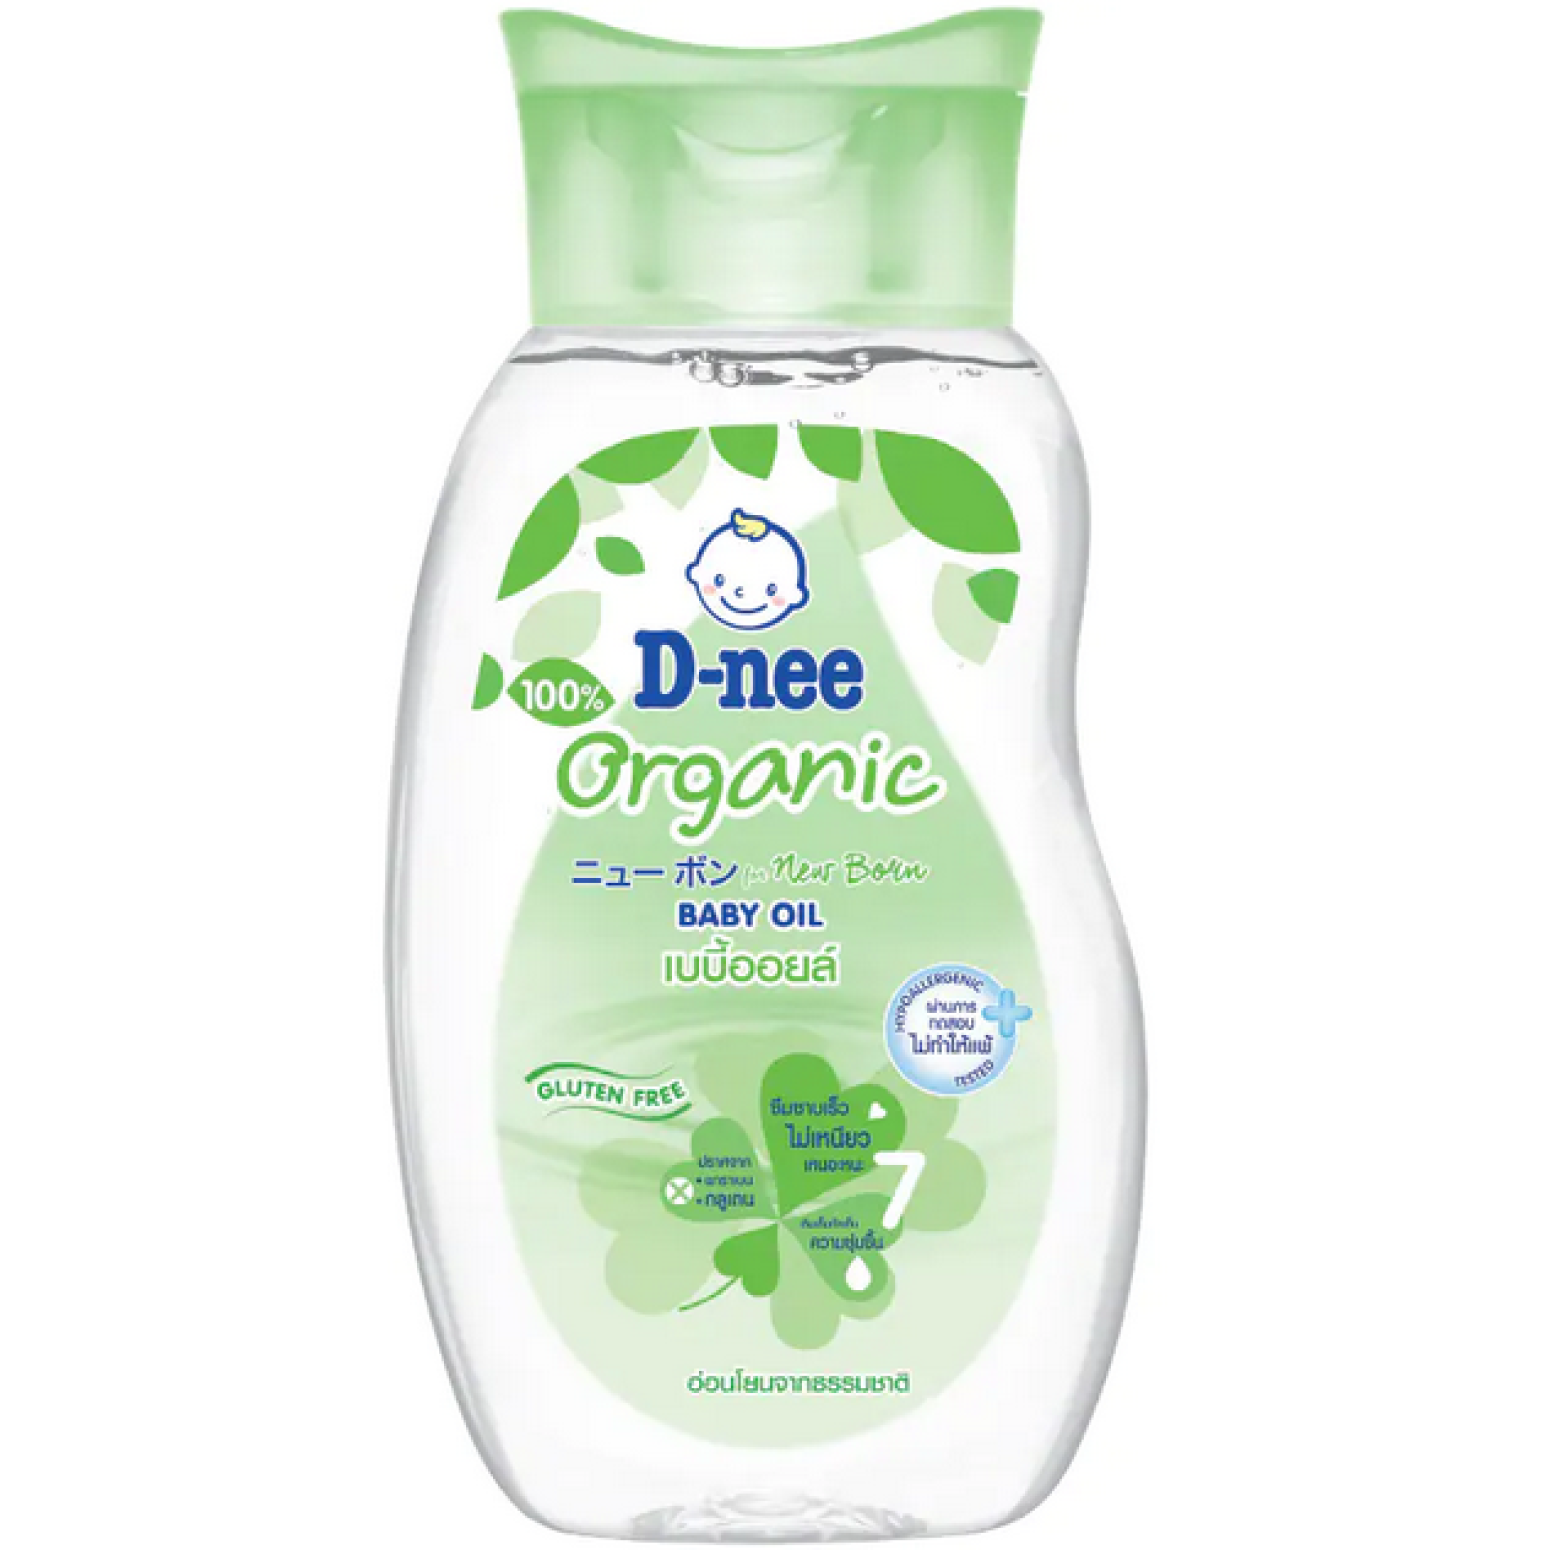 D-nee Organic Baby Oil